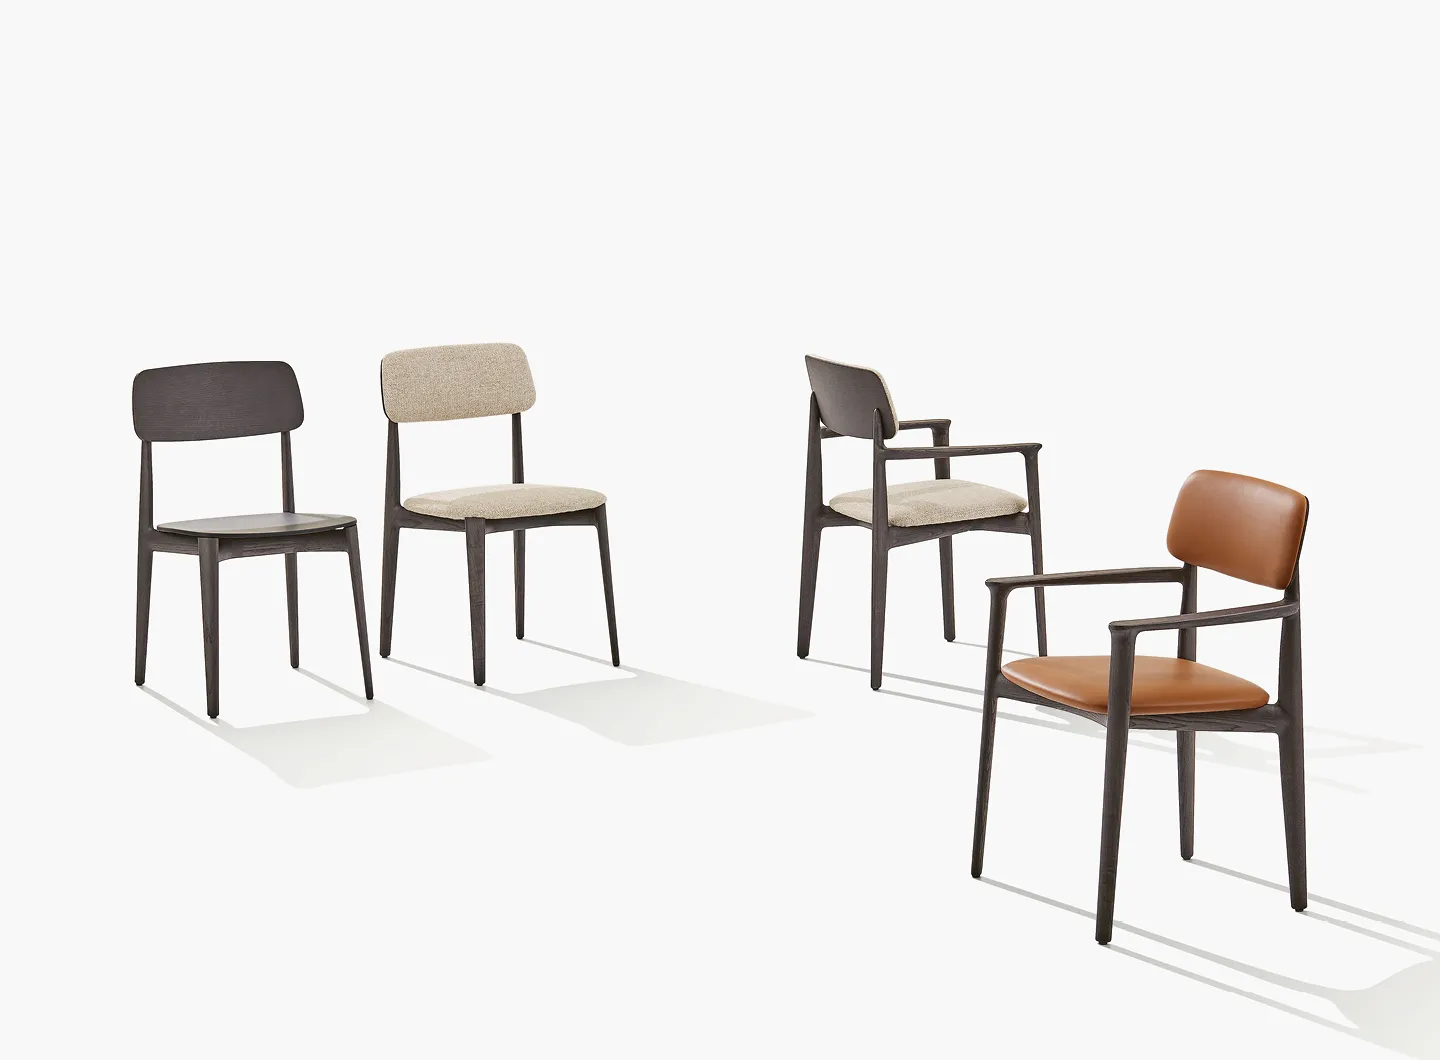 Curve chair, design by E Gallina